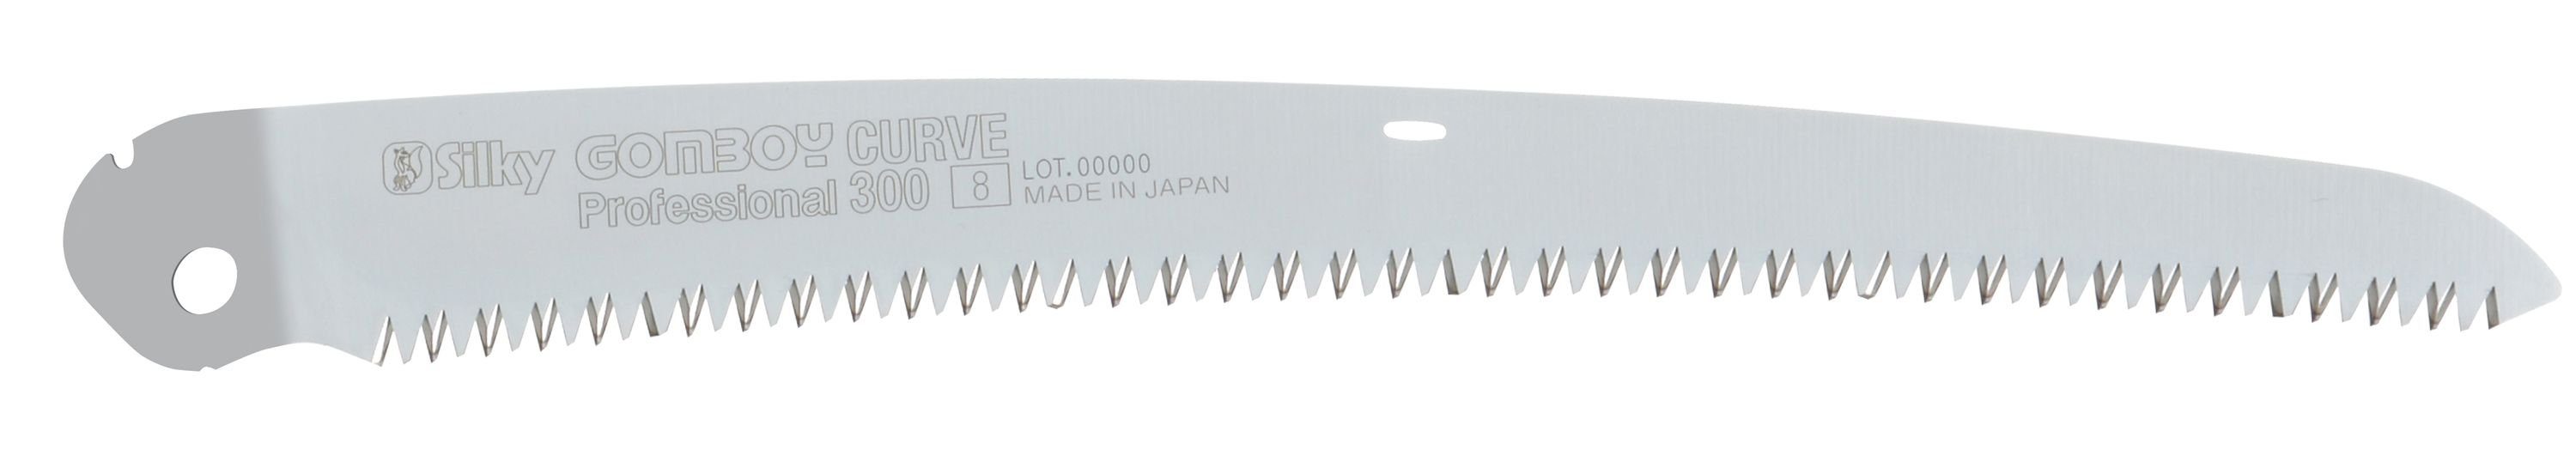 Silky Sägeblatt Silky Ersatzblatt für Gomboy Curve 300mm, 8 ZpZ grob, mit gebogener Klinge | Sägeblätter